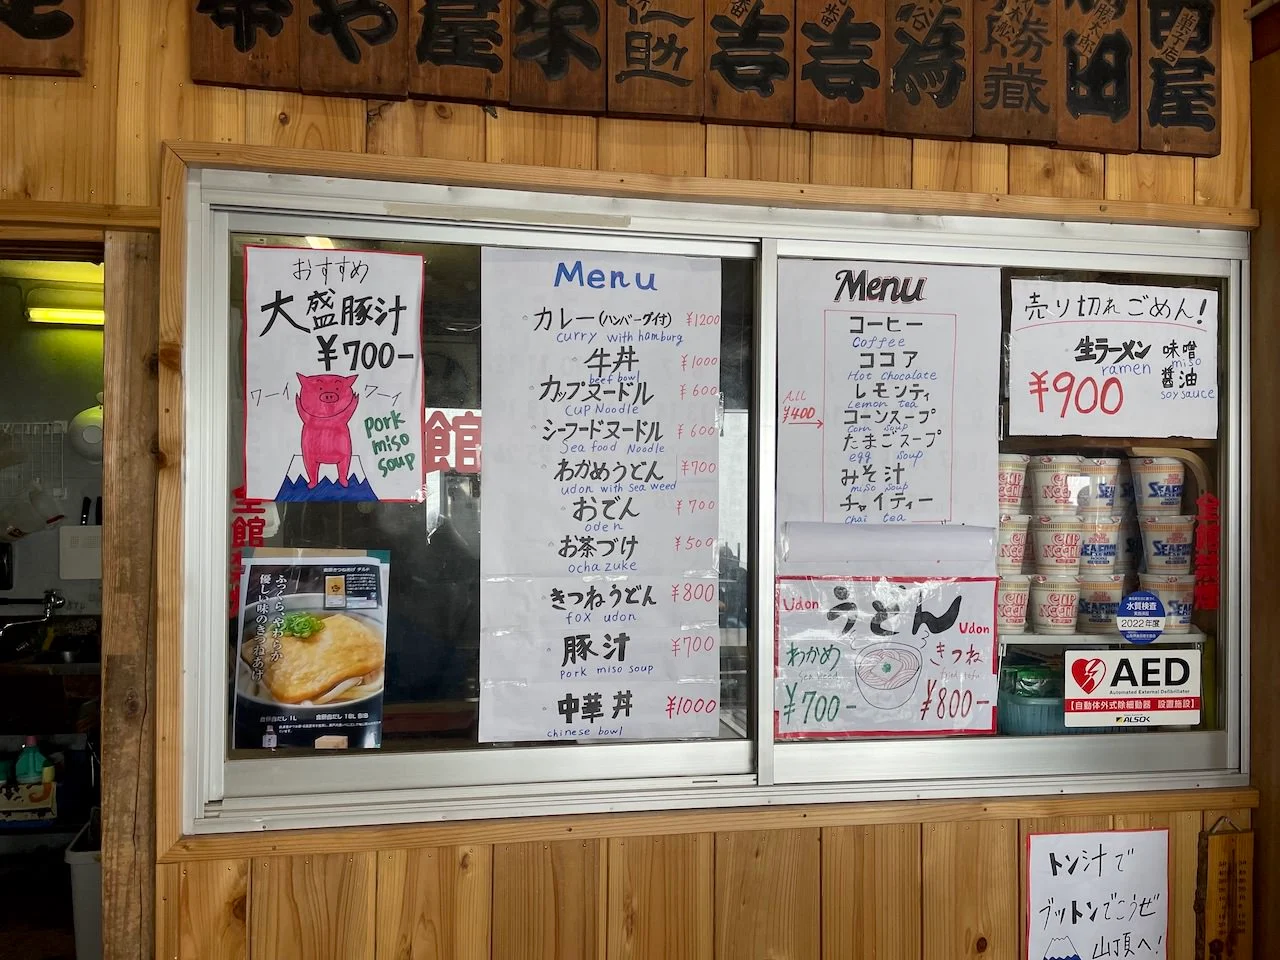 7th Station Tomoe-kan's menu